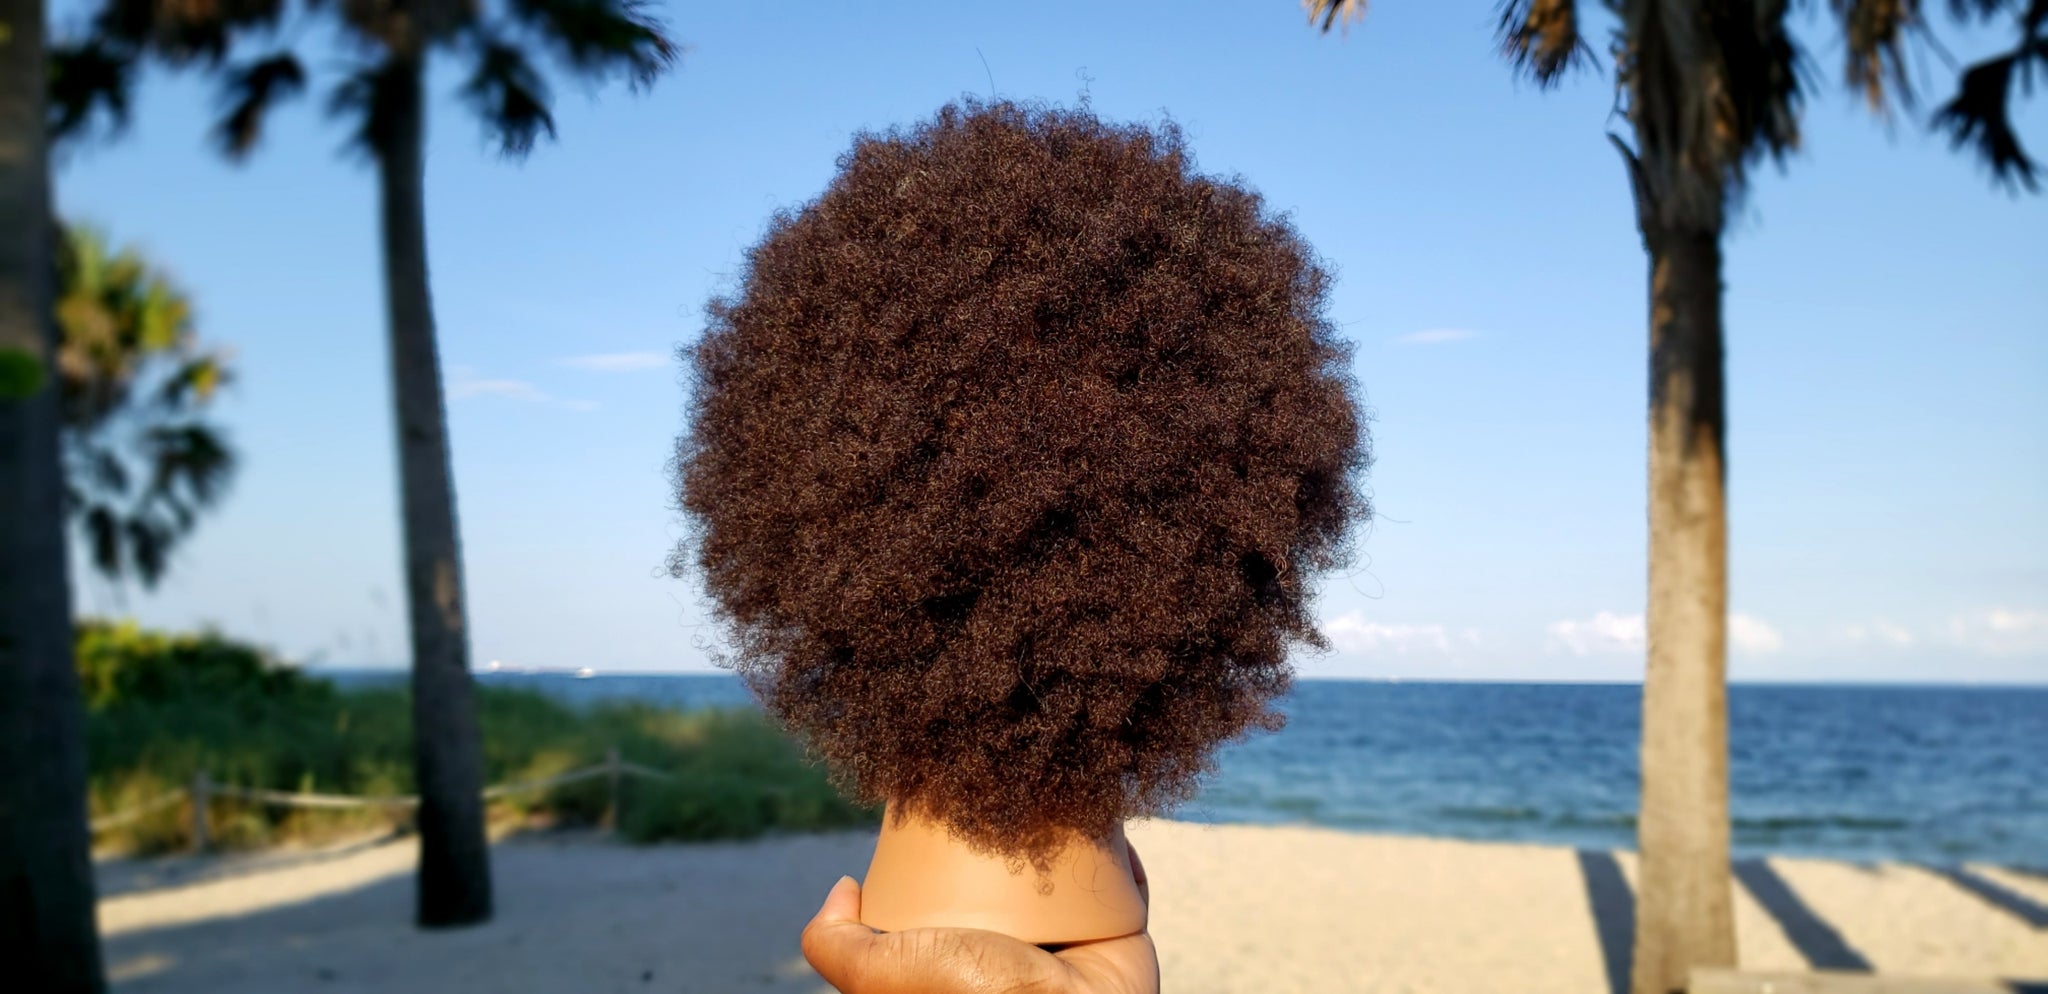 Training Mannequin Head w/ 100% Afro kinky human hair